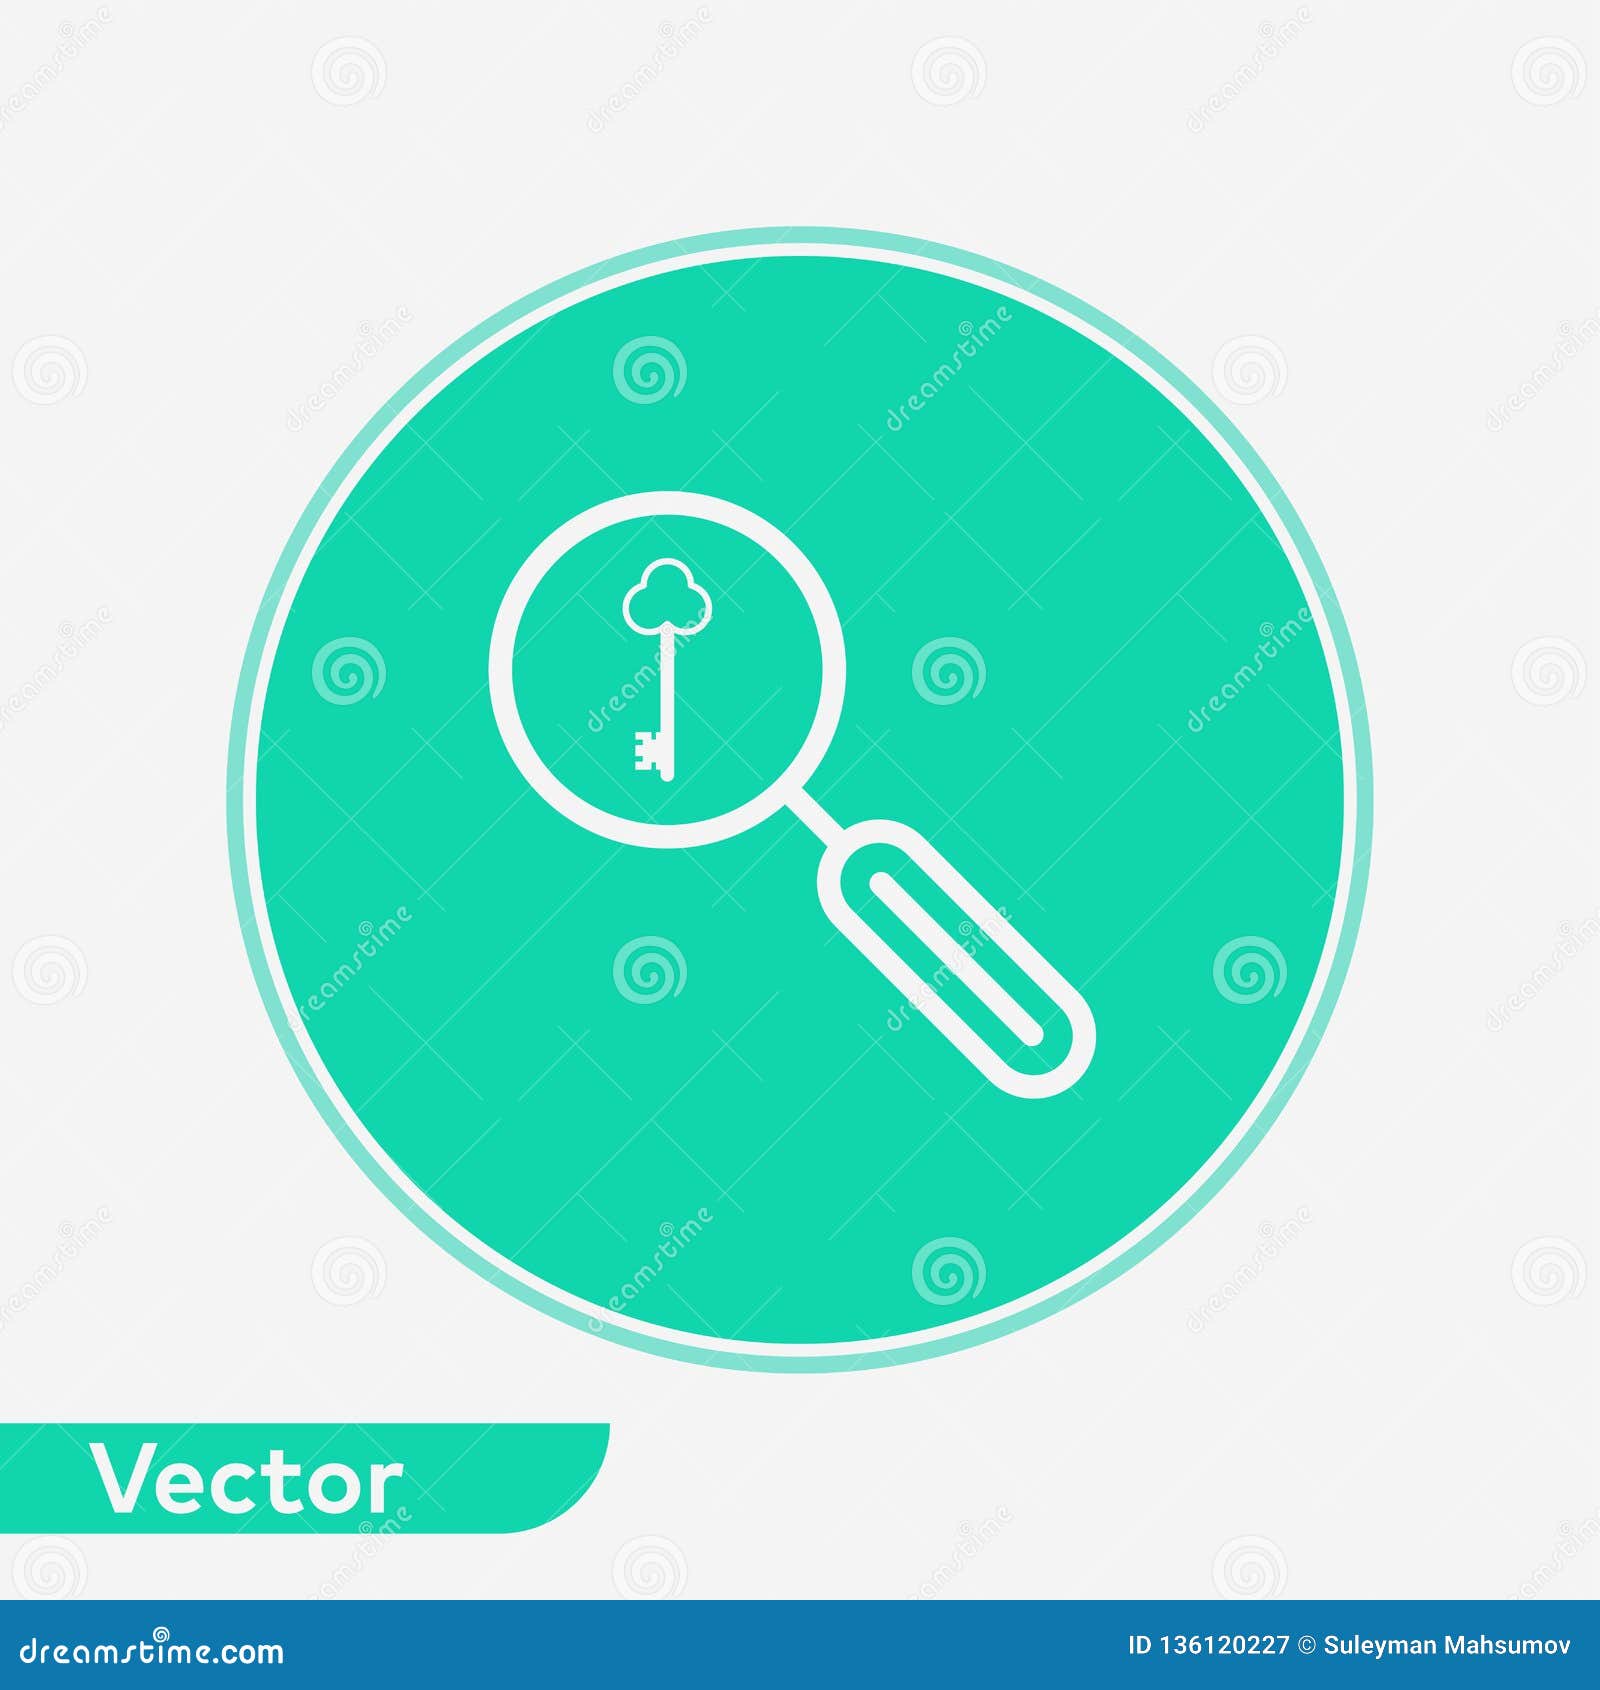 Keyword Search Vector Icon Sign Symbol Stock Vector Illustration Of Keyword Flat